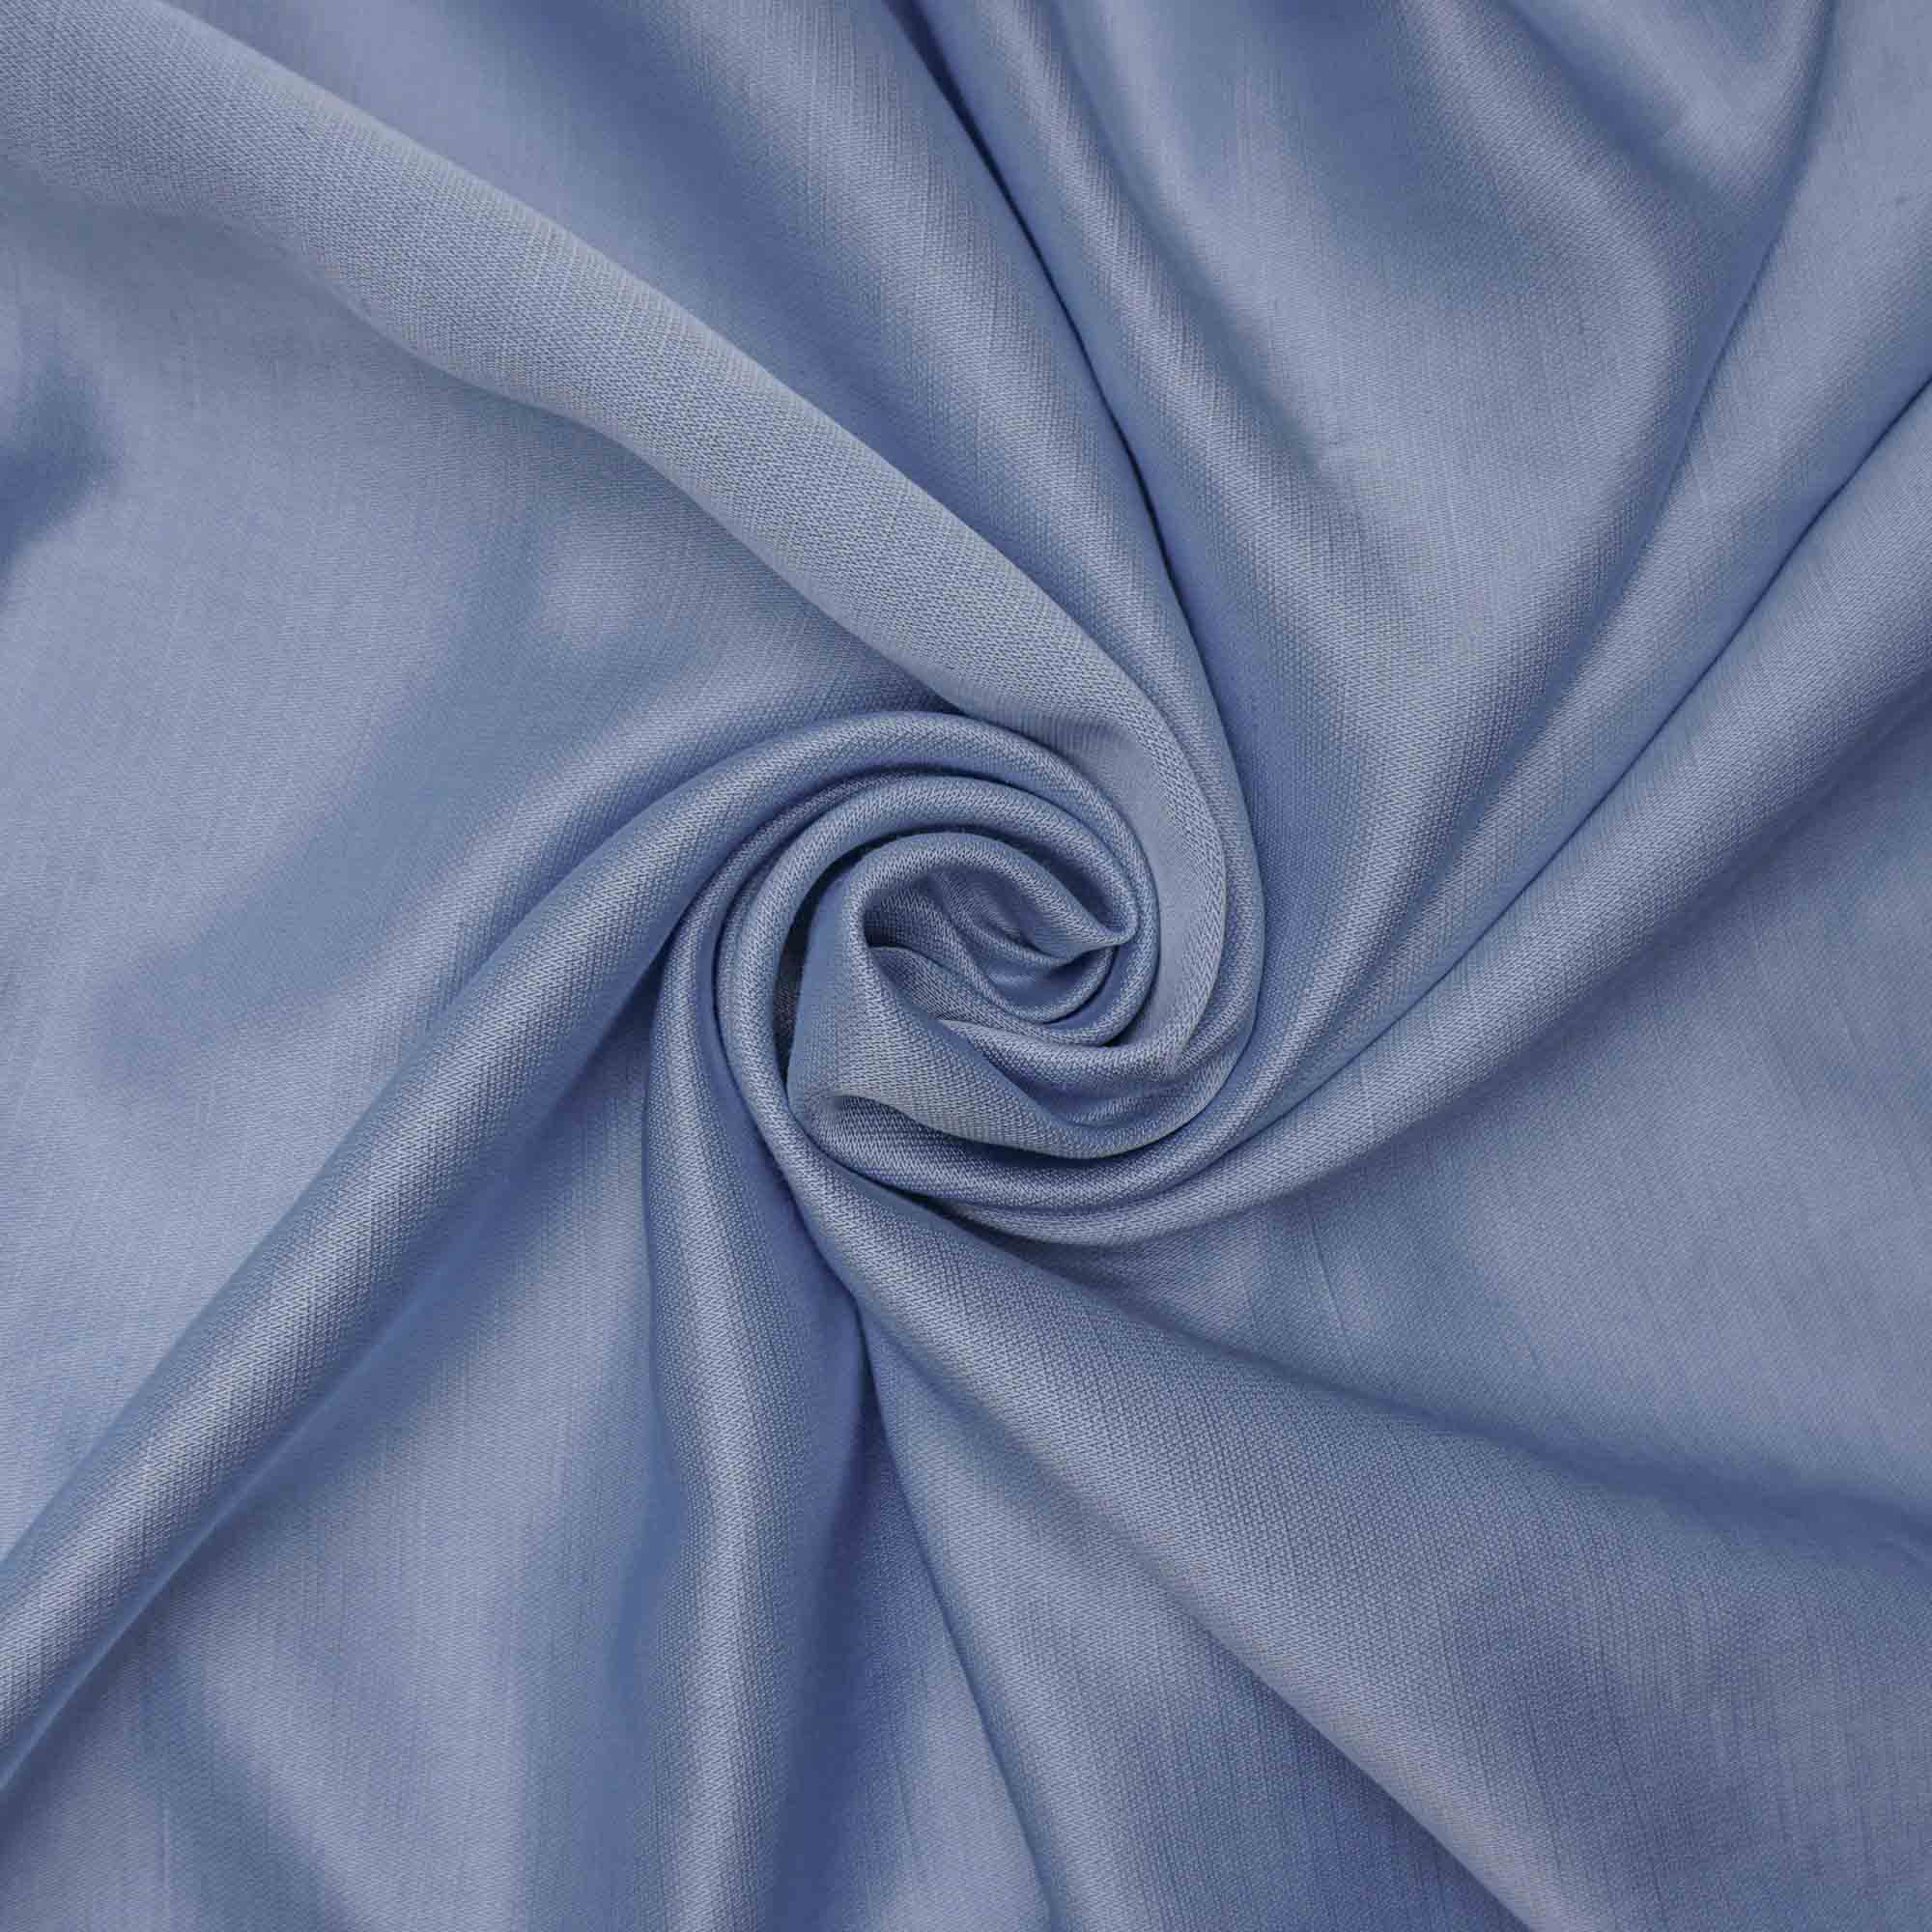 Tecido linho misto changeant azul serenity (tecido italiano legítimo)